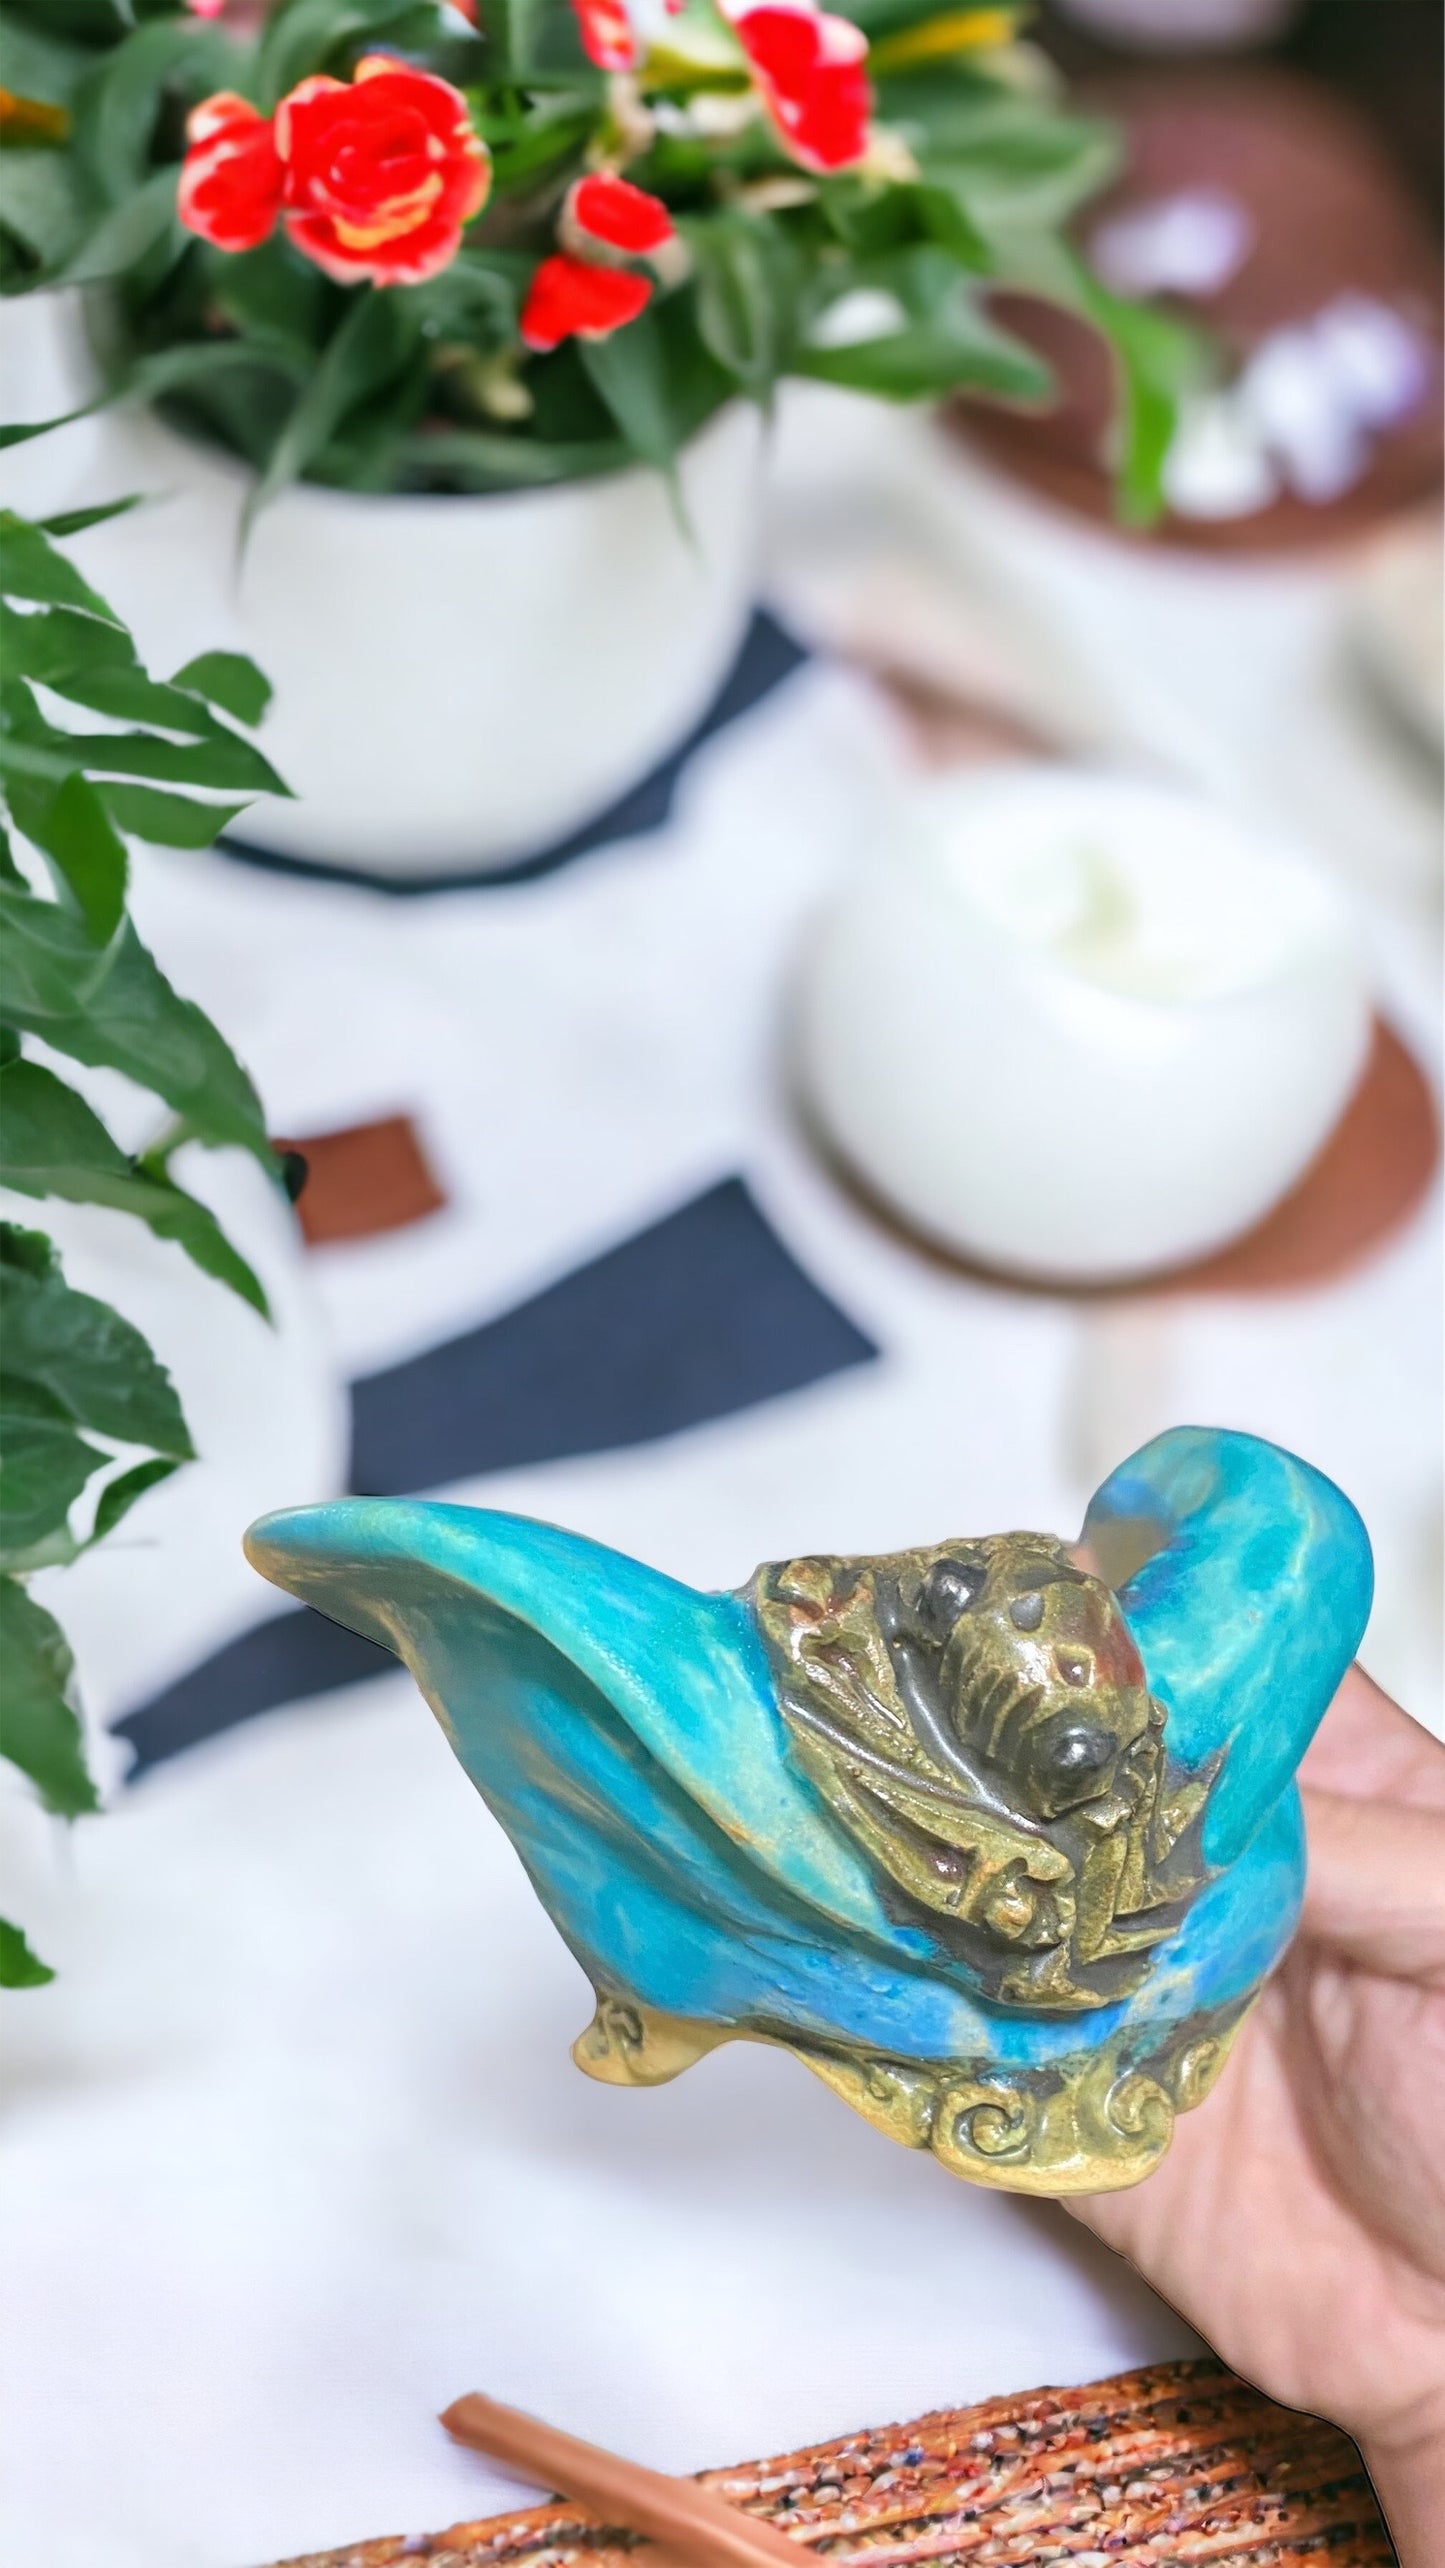 Masashi - Frog on a Floppy Bowl Bonsai or Accent Pot